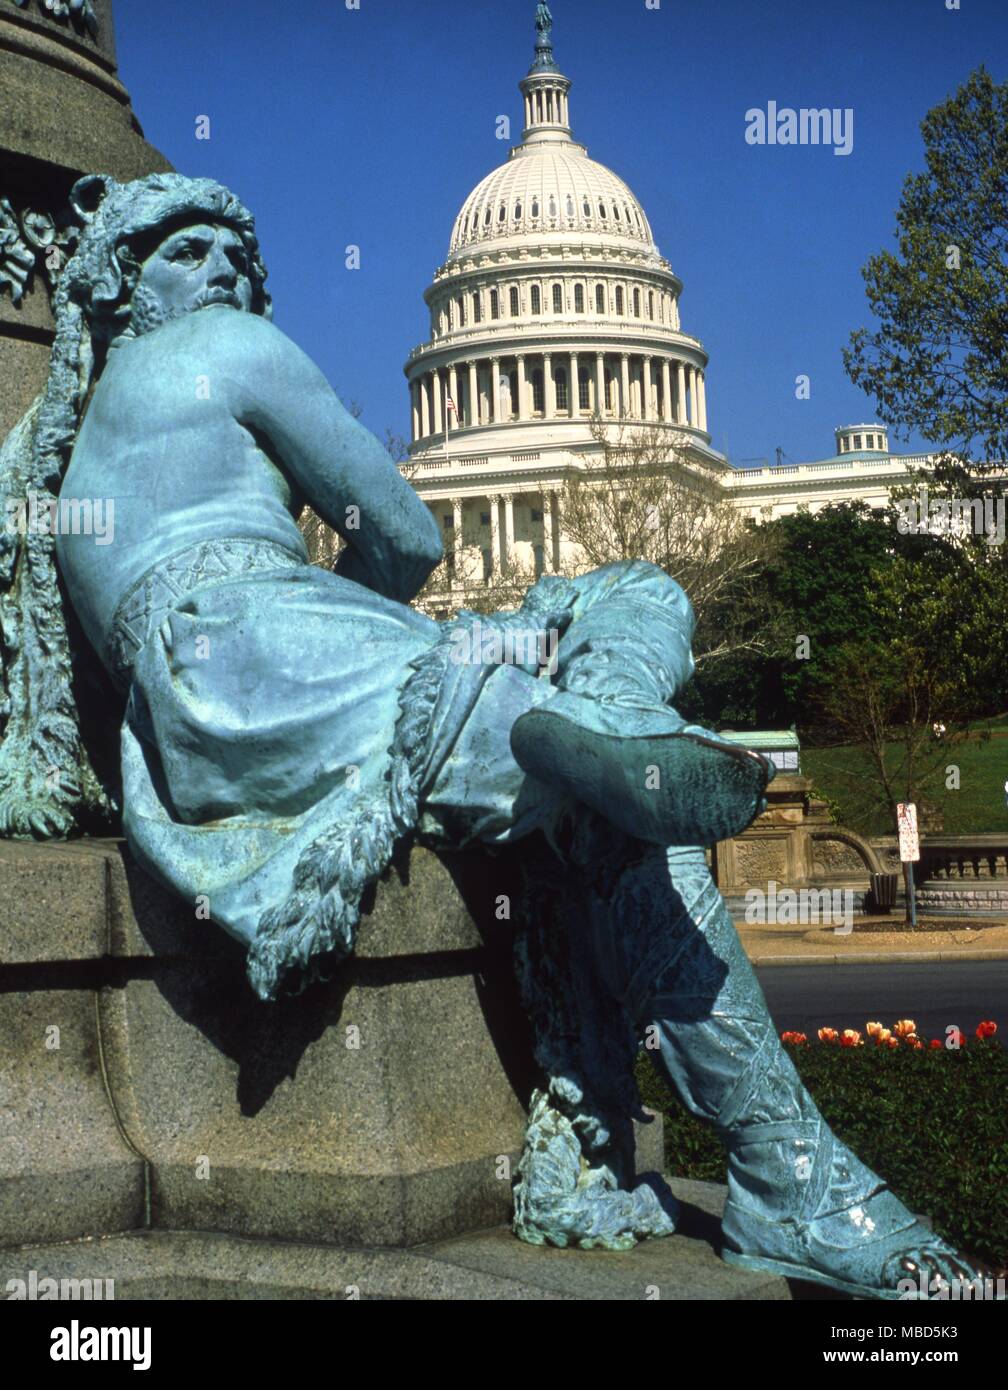 Estados Unidos - Washington DC - detalle del monumento al presidente asesinado, James A. Garfield, en Washington DC, al noreste del edificio del Capitolio - © /Charles Walker Foto de stock